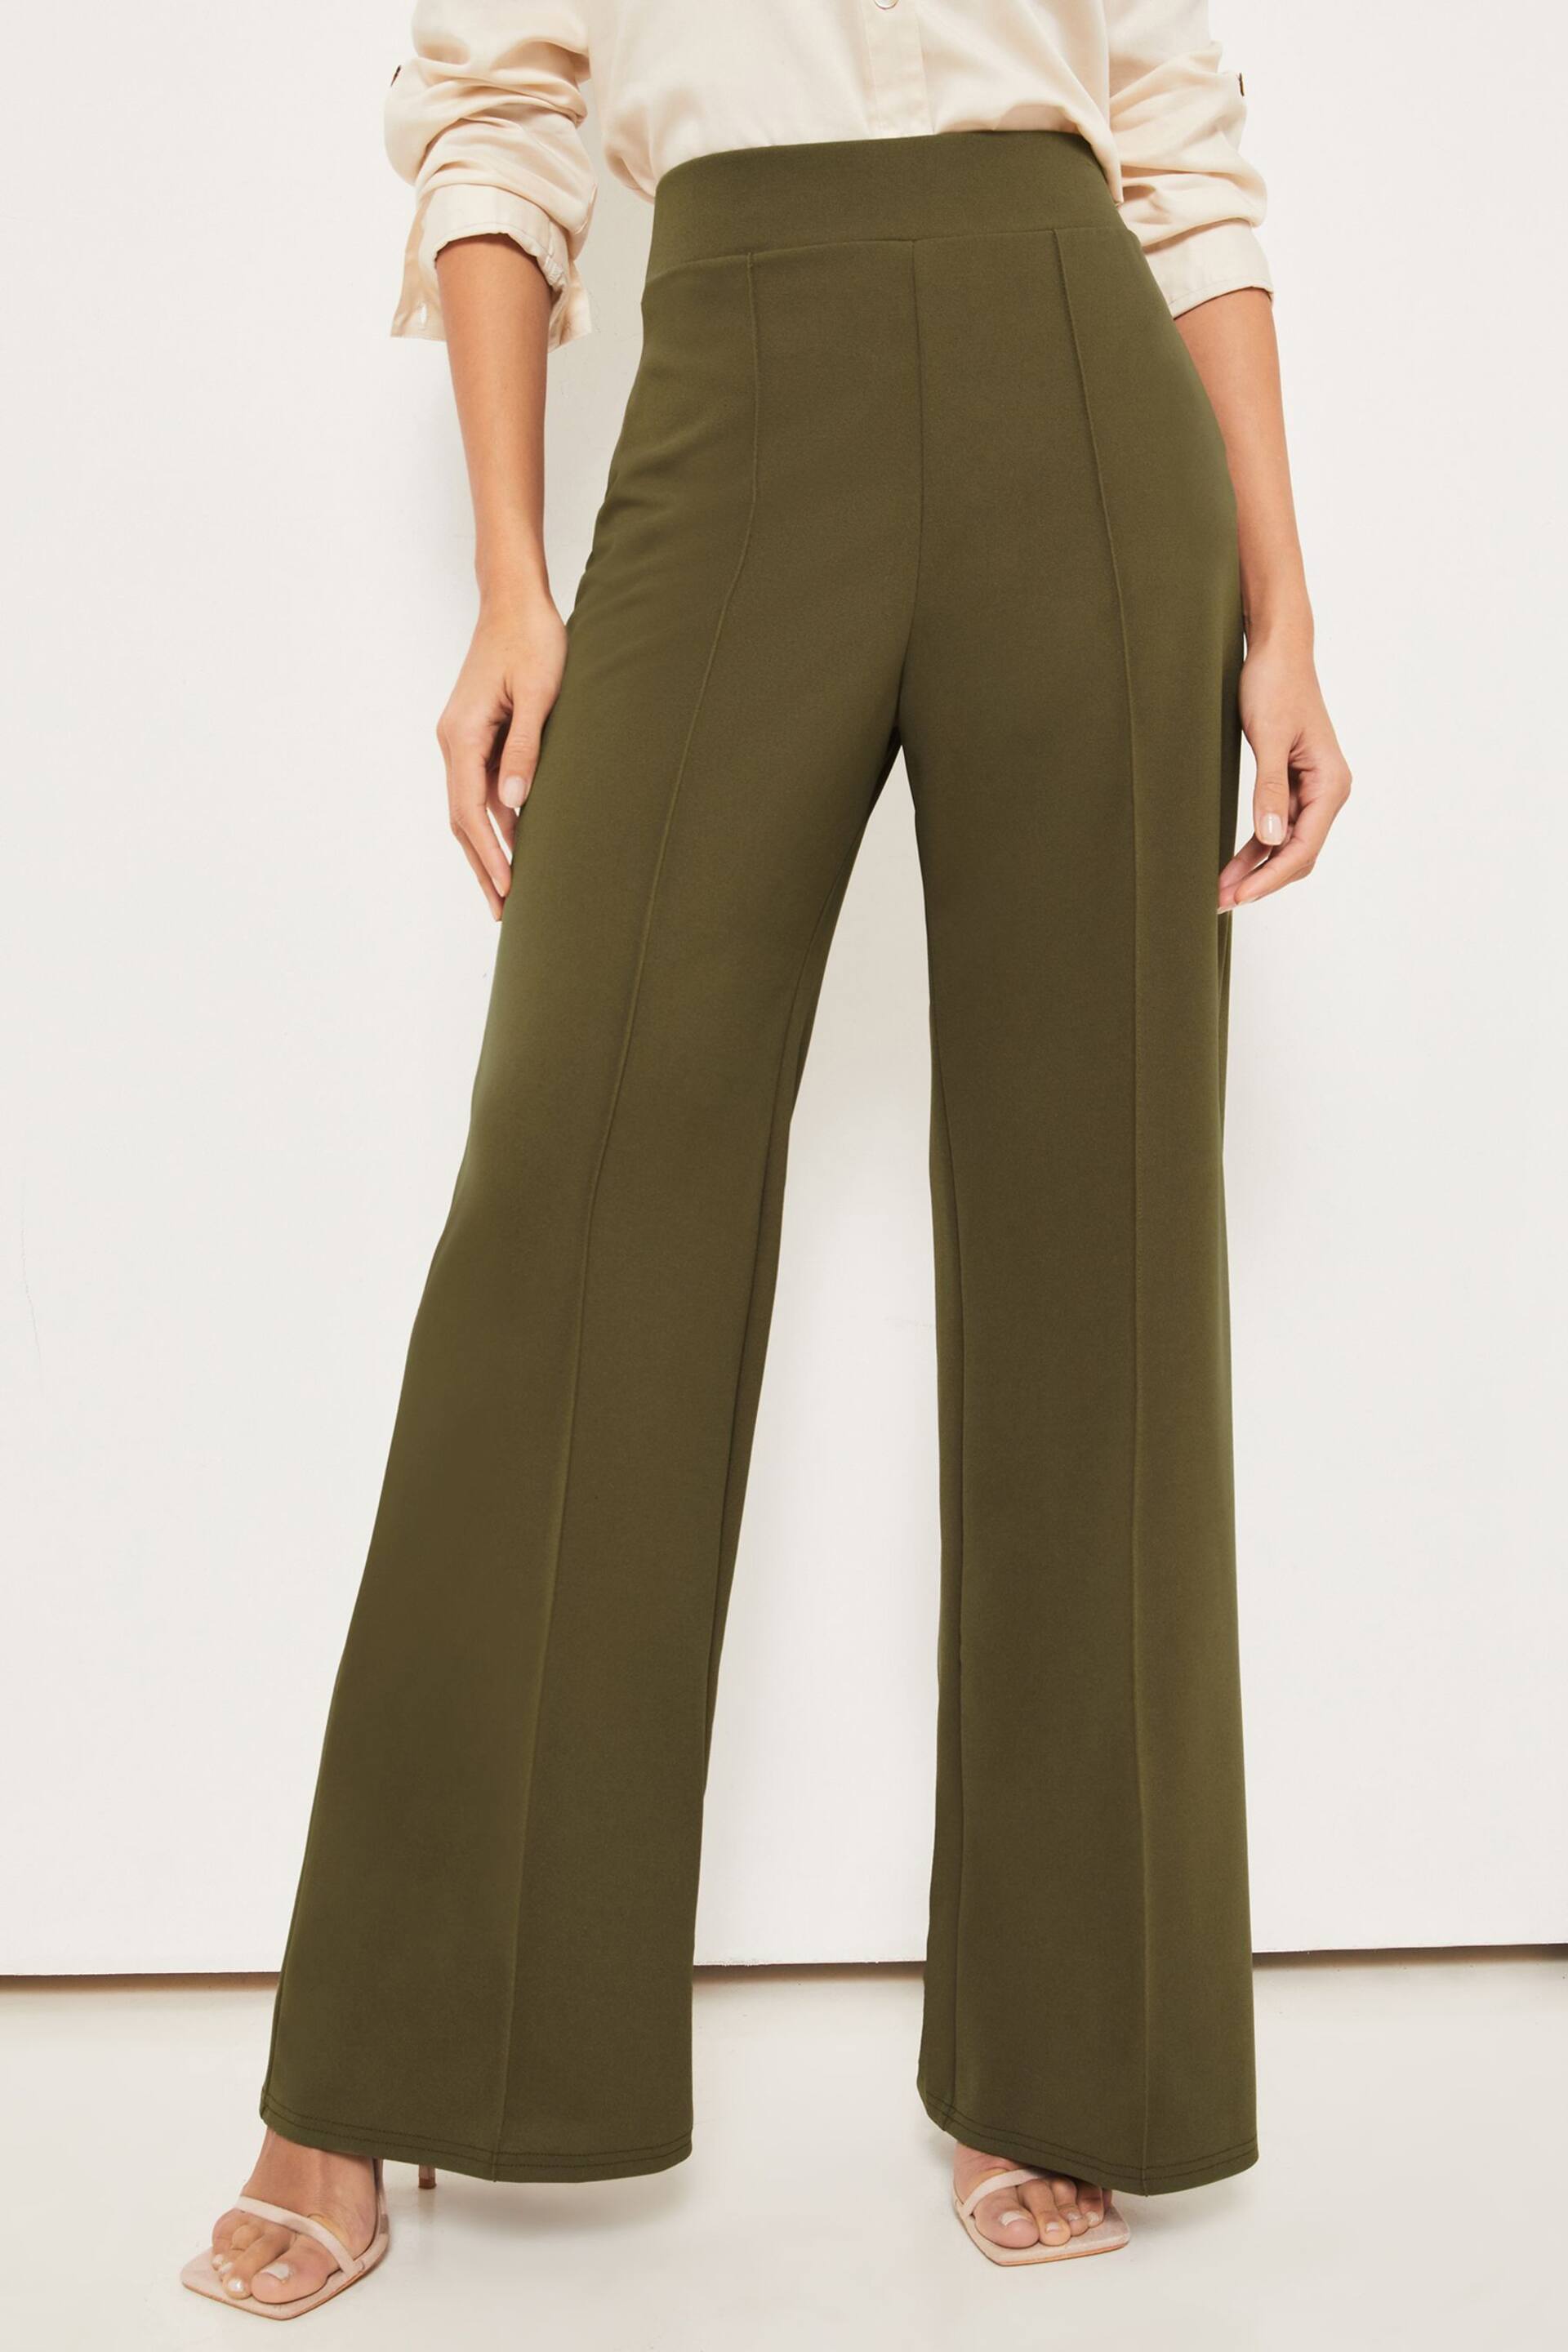 Lipsy Khaki Green Twill High Waist Wide Leg Tailored Trousers - Image 1 of 4